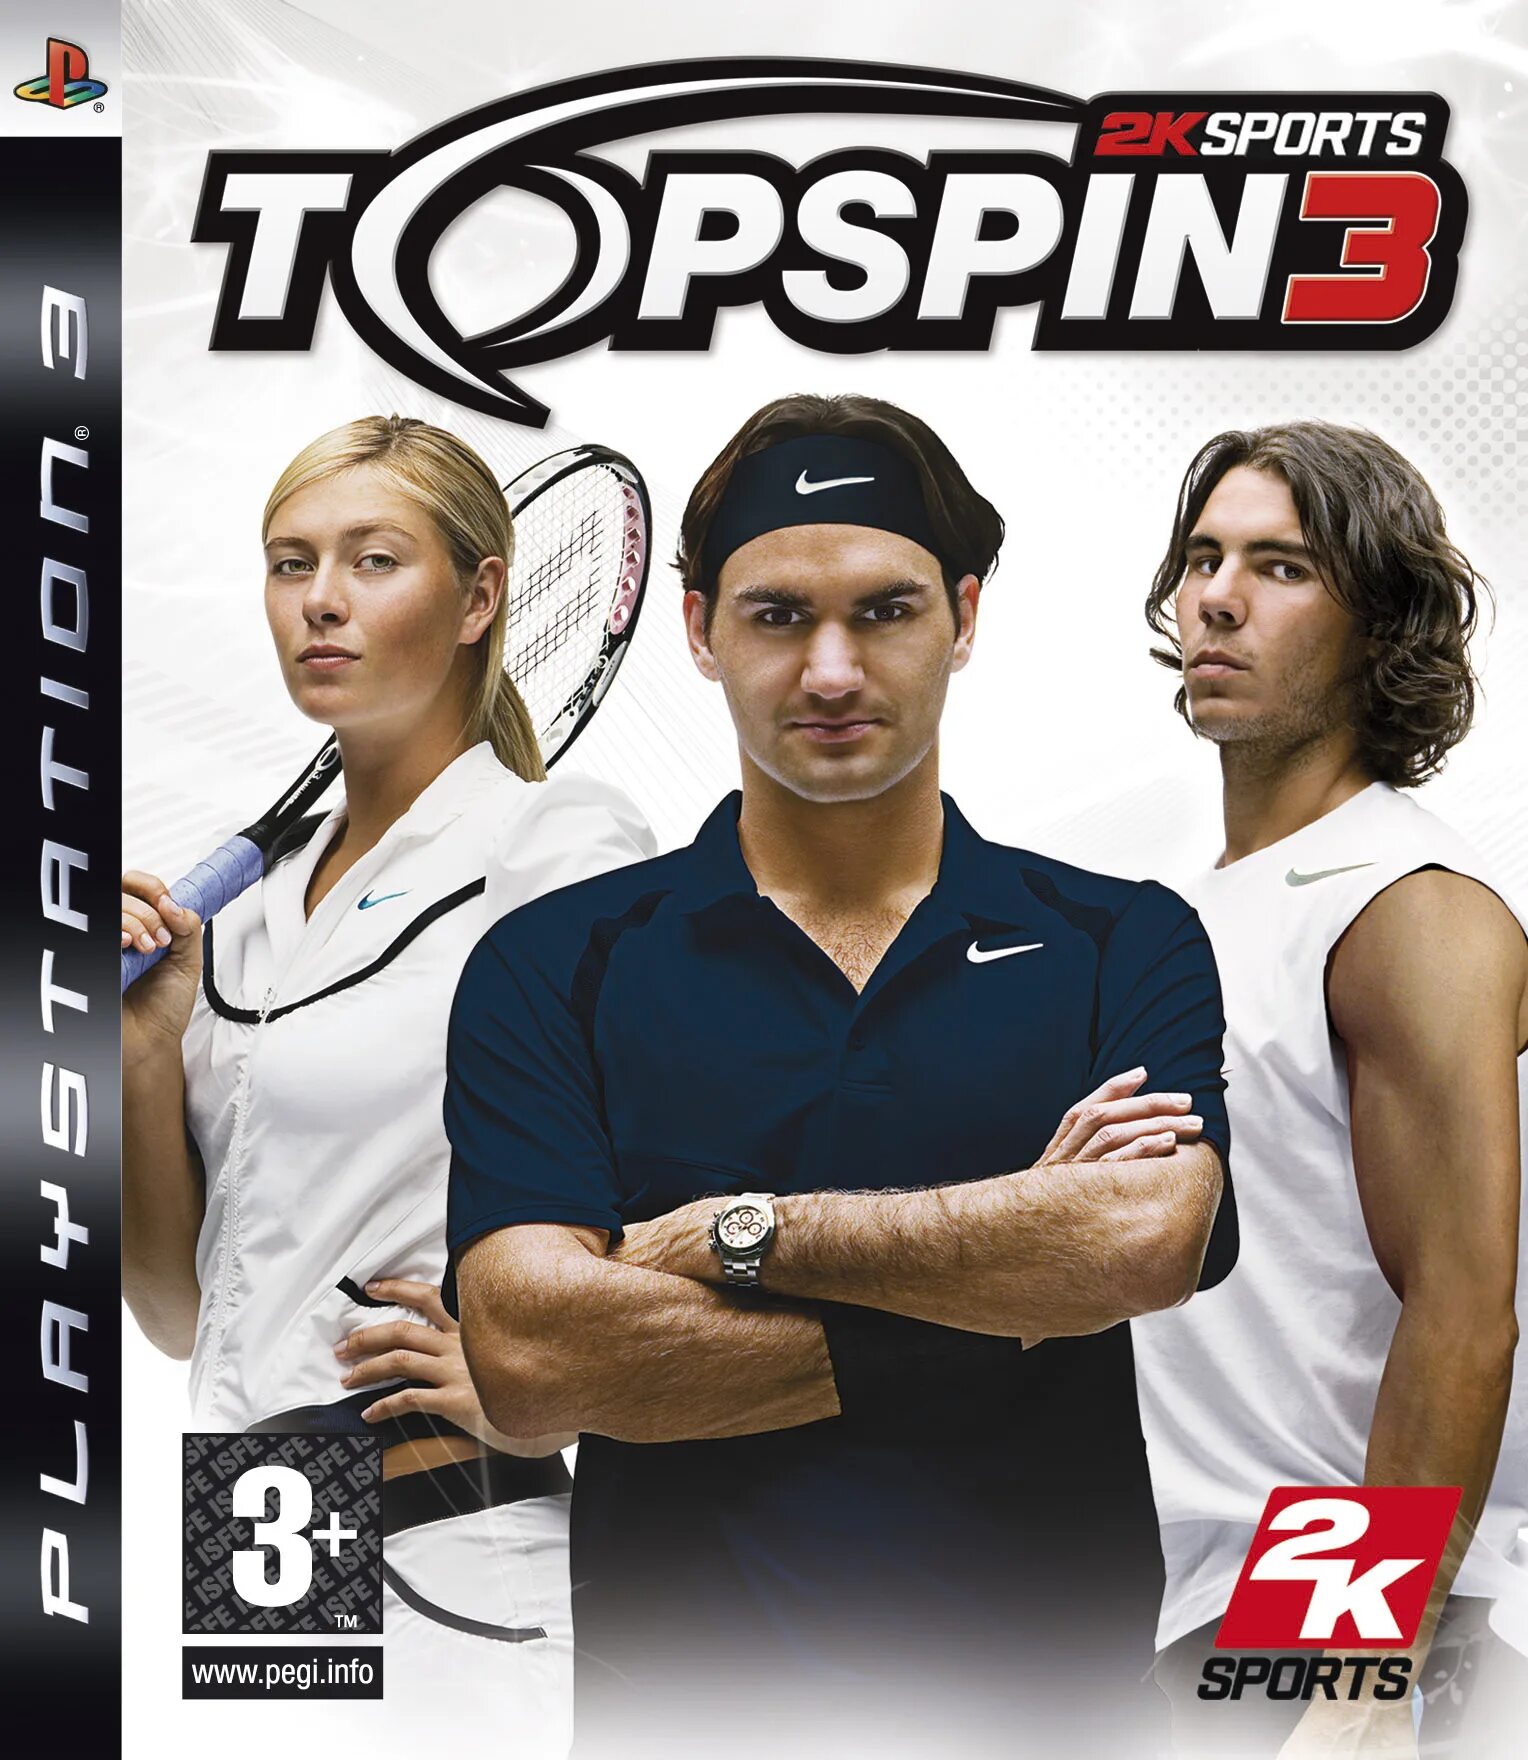 Top Spin 3. Теннис на ps3. Обложка топ спин 3.